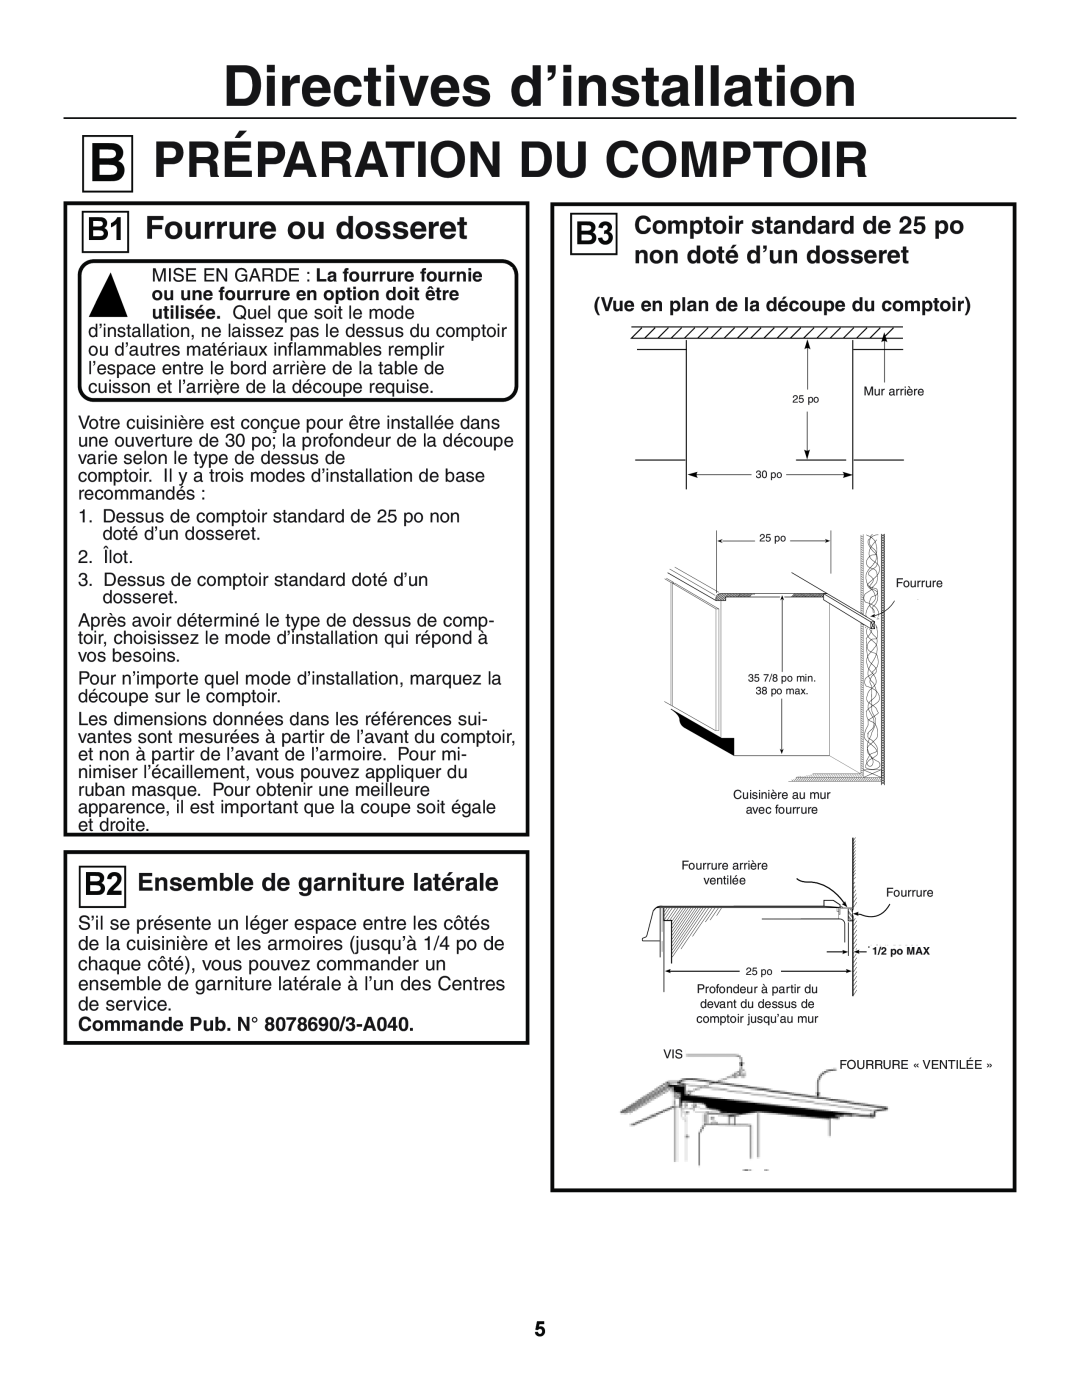 GE JGSP44 manual PRÉPARATIONreparing the Counter DU COMPTOIR, B2 Ensemble de garniture latérale, Top view of counter cutout 